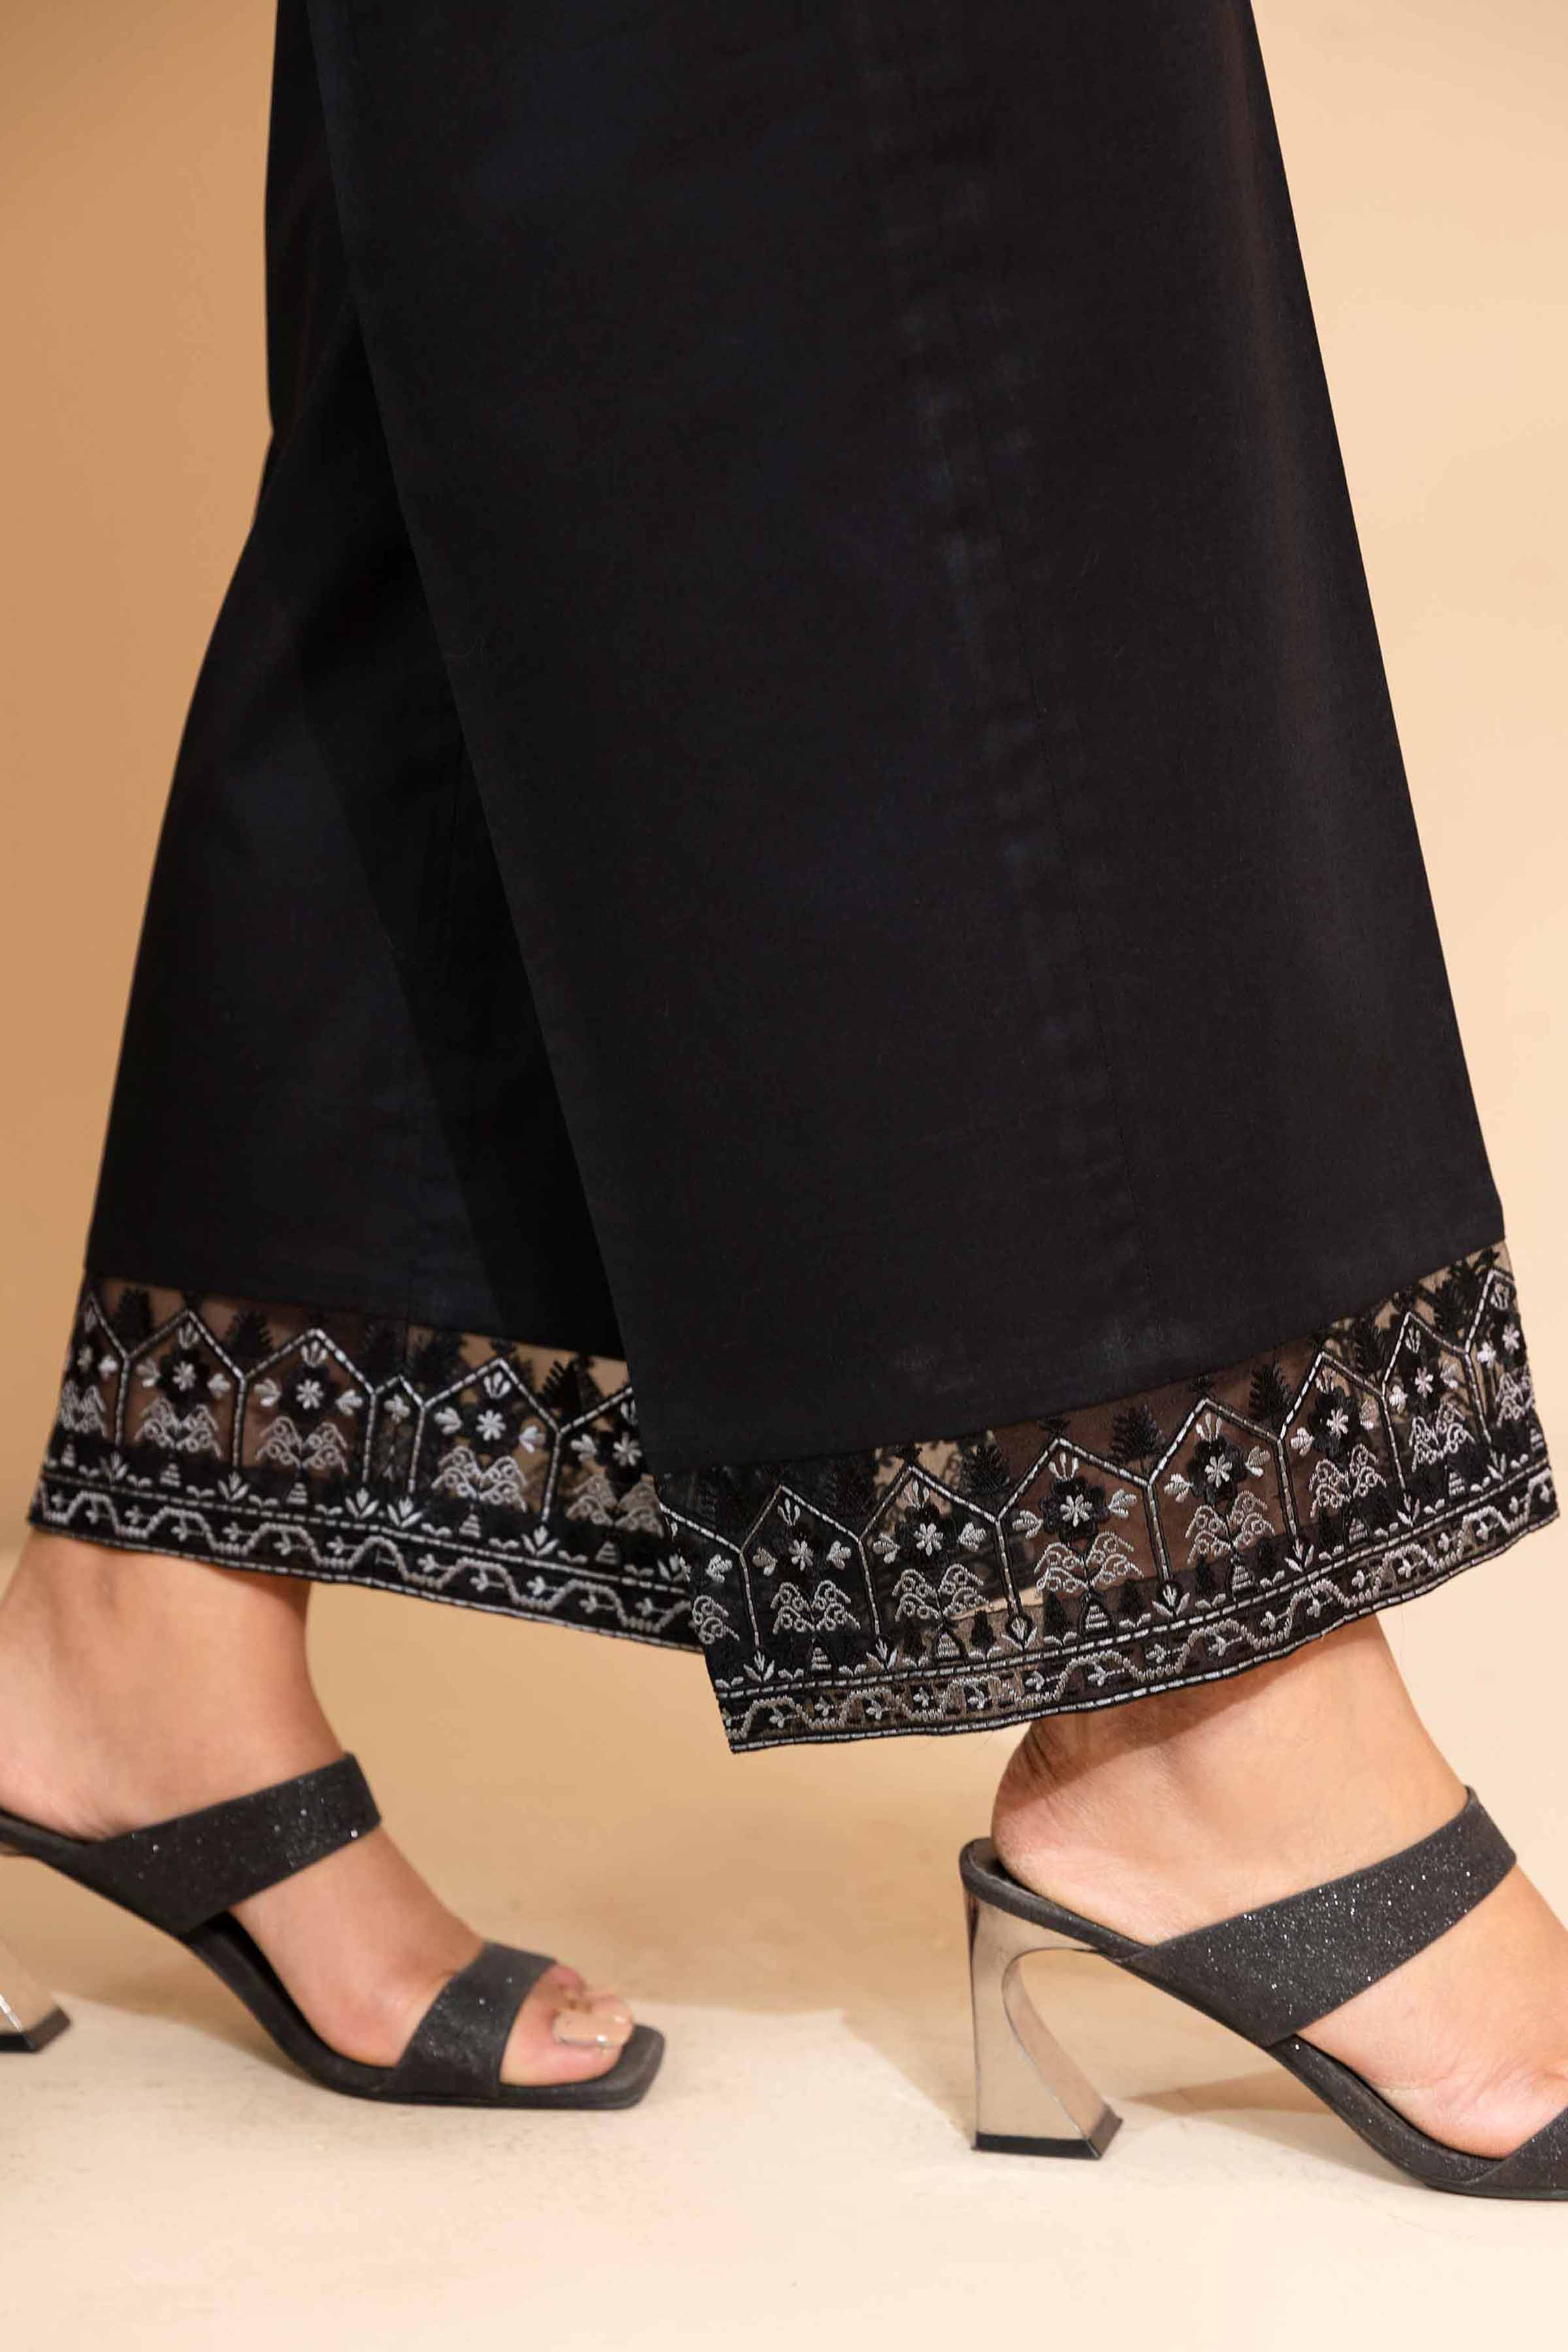 Stylish ladies trouser design 2021 | trouser pant design for eid by Nisa  world - YouTube